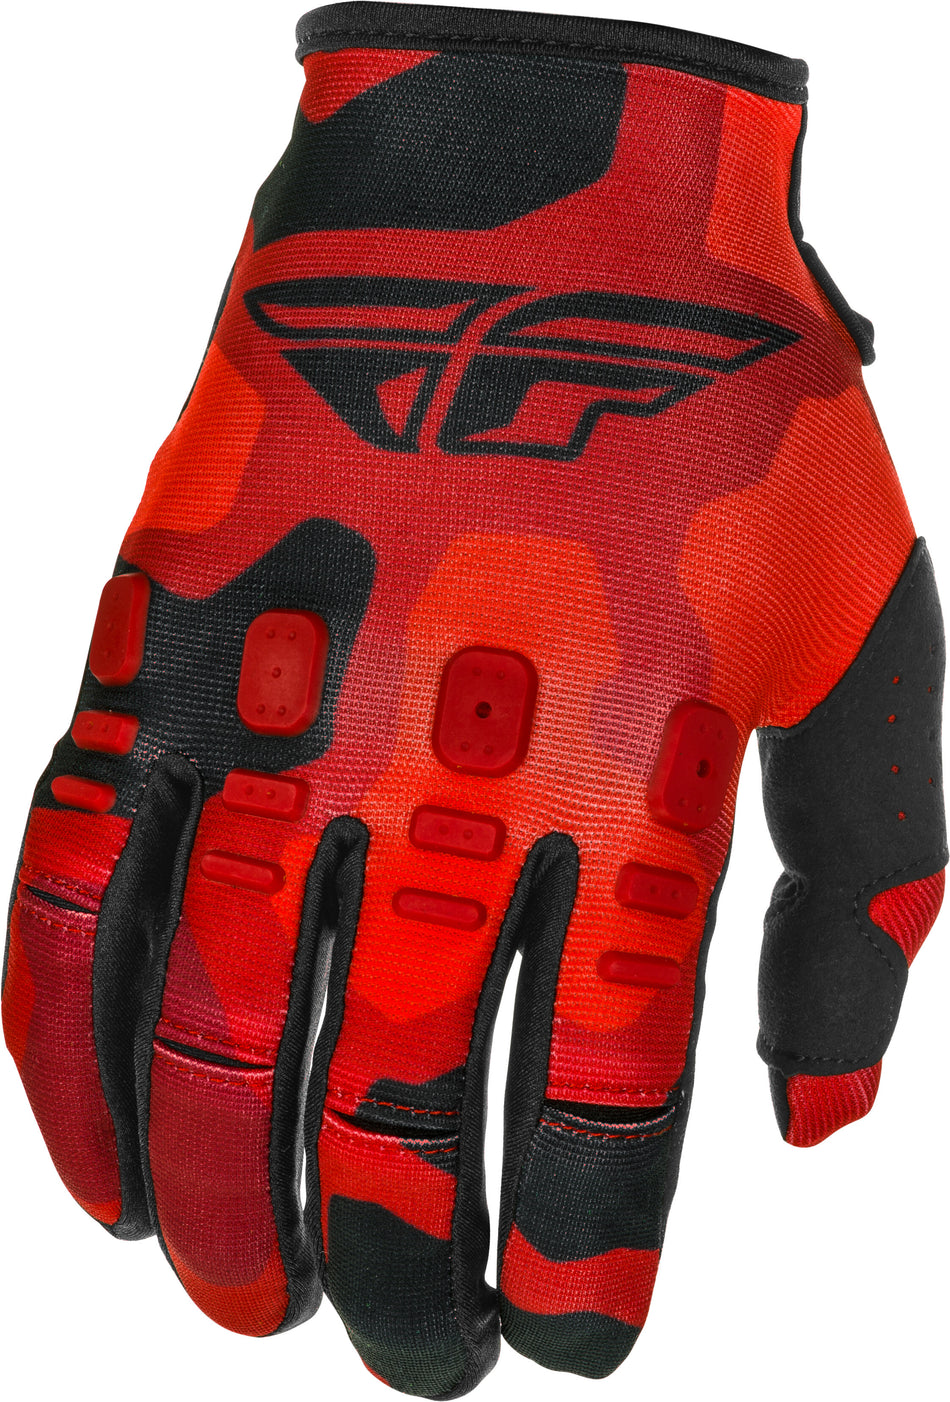 FLY RACING Kinetic K221 Gloves Red/Black Sz 13 374-51213